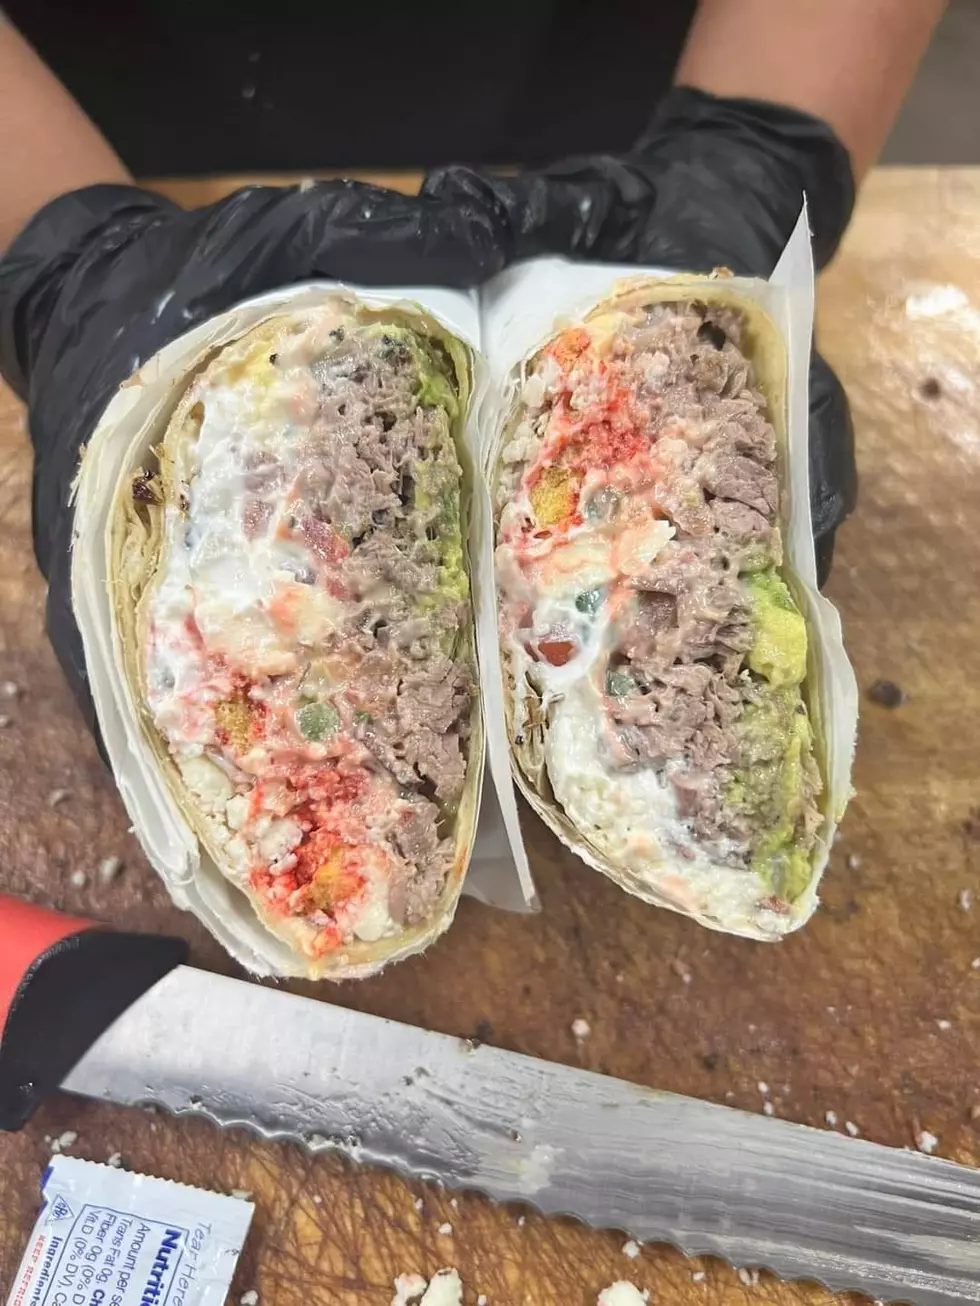 Midland Restaurant Offers 2lbs Burrito